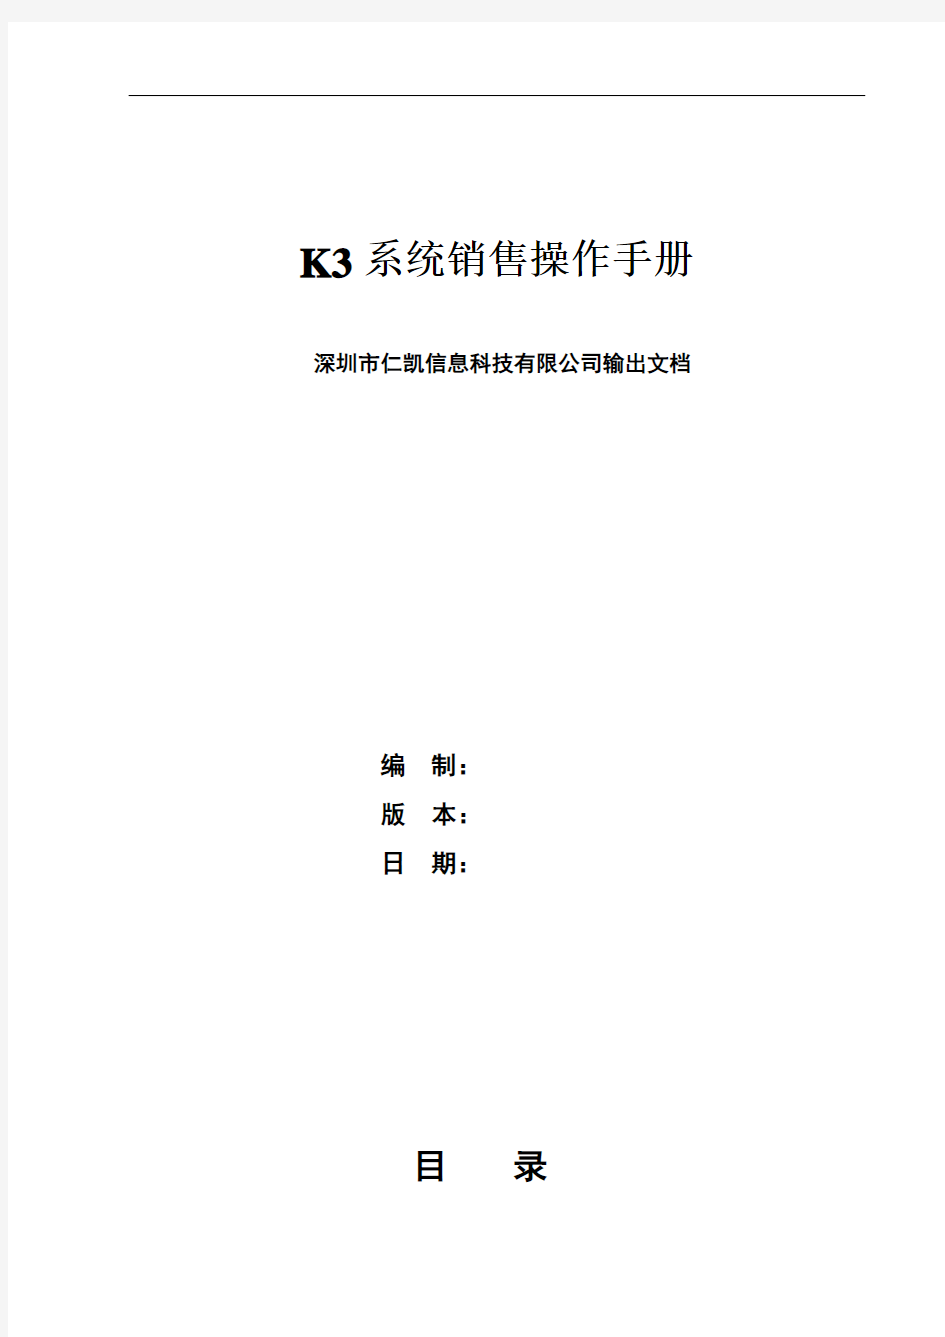 K3系统销售操作手册